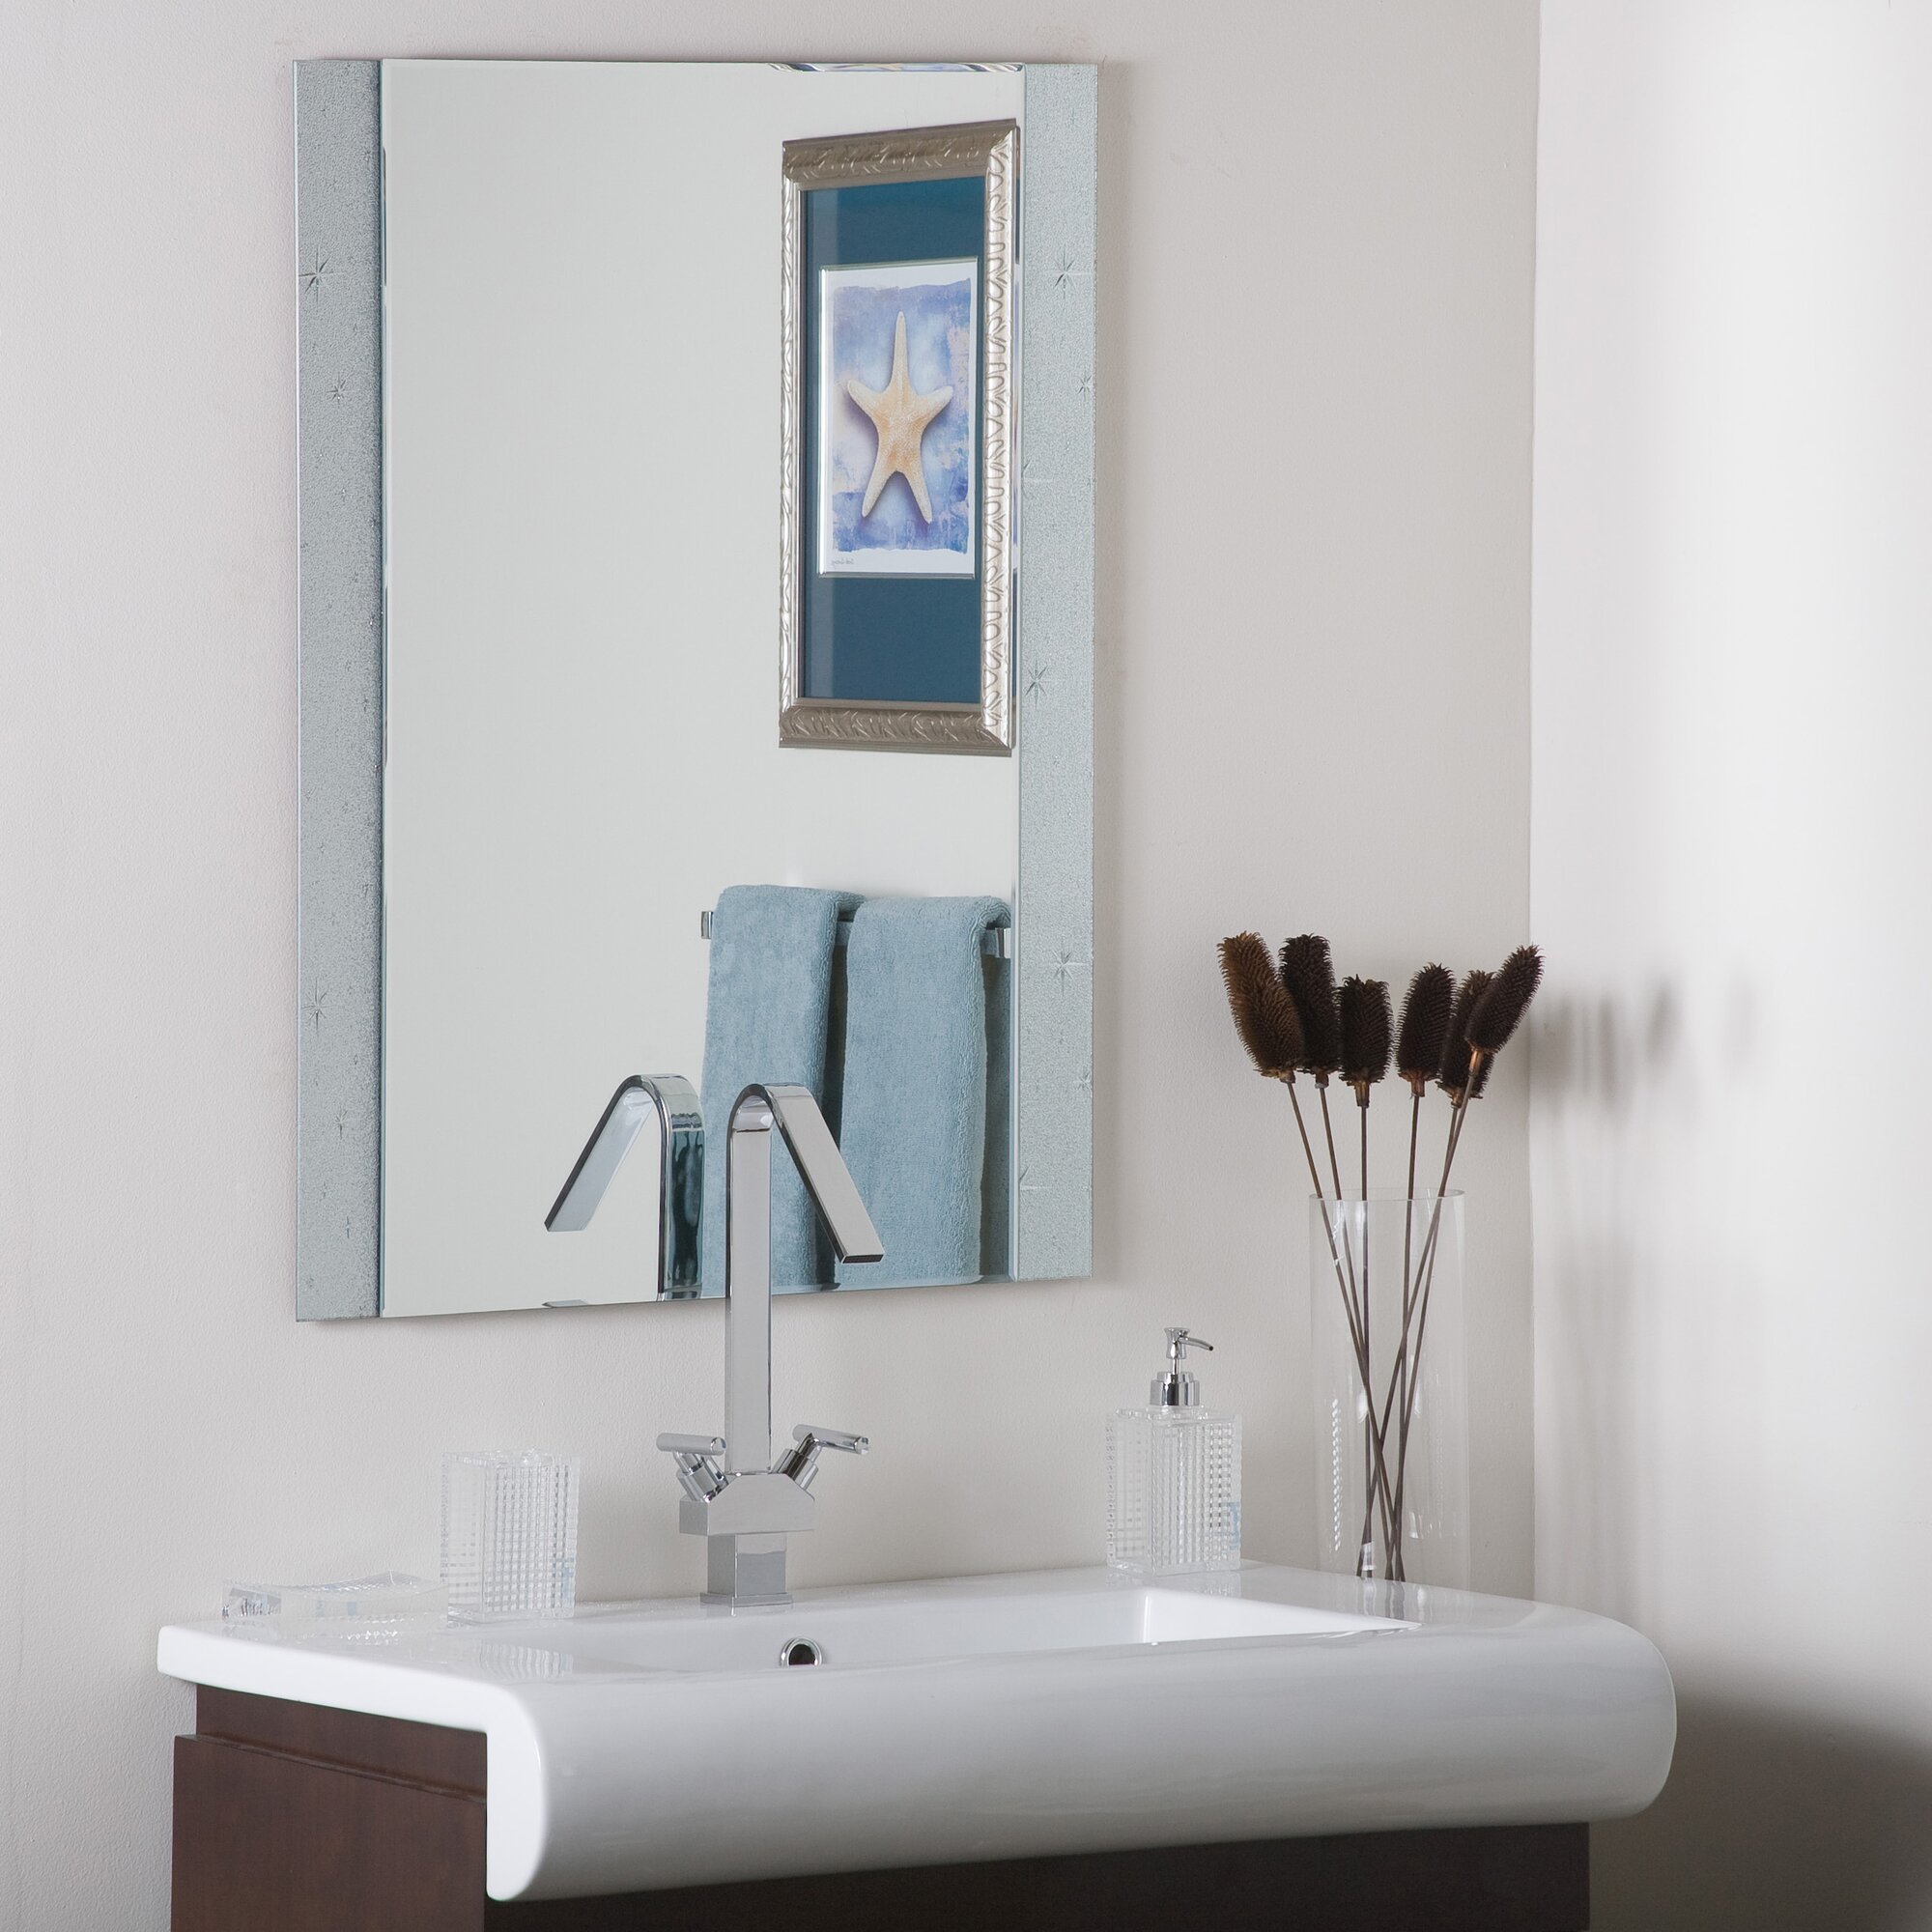 Bathroom Frameless Wall Mirrors Bathroom Mirrors And Contemporary